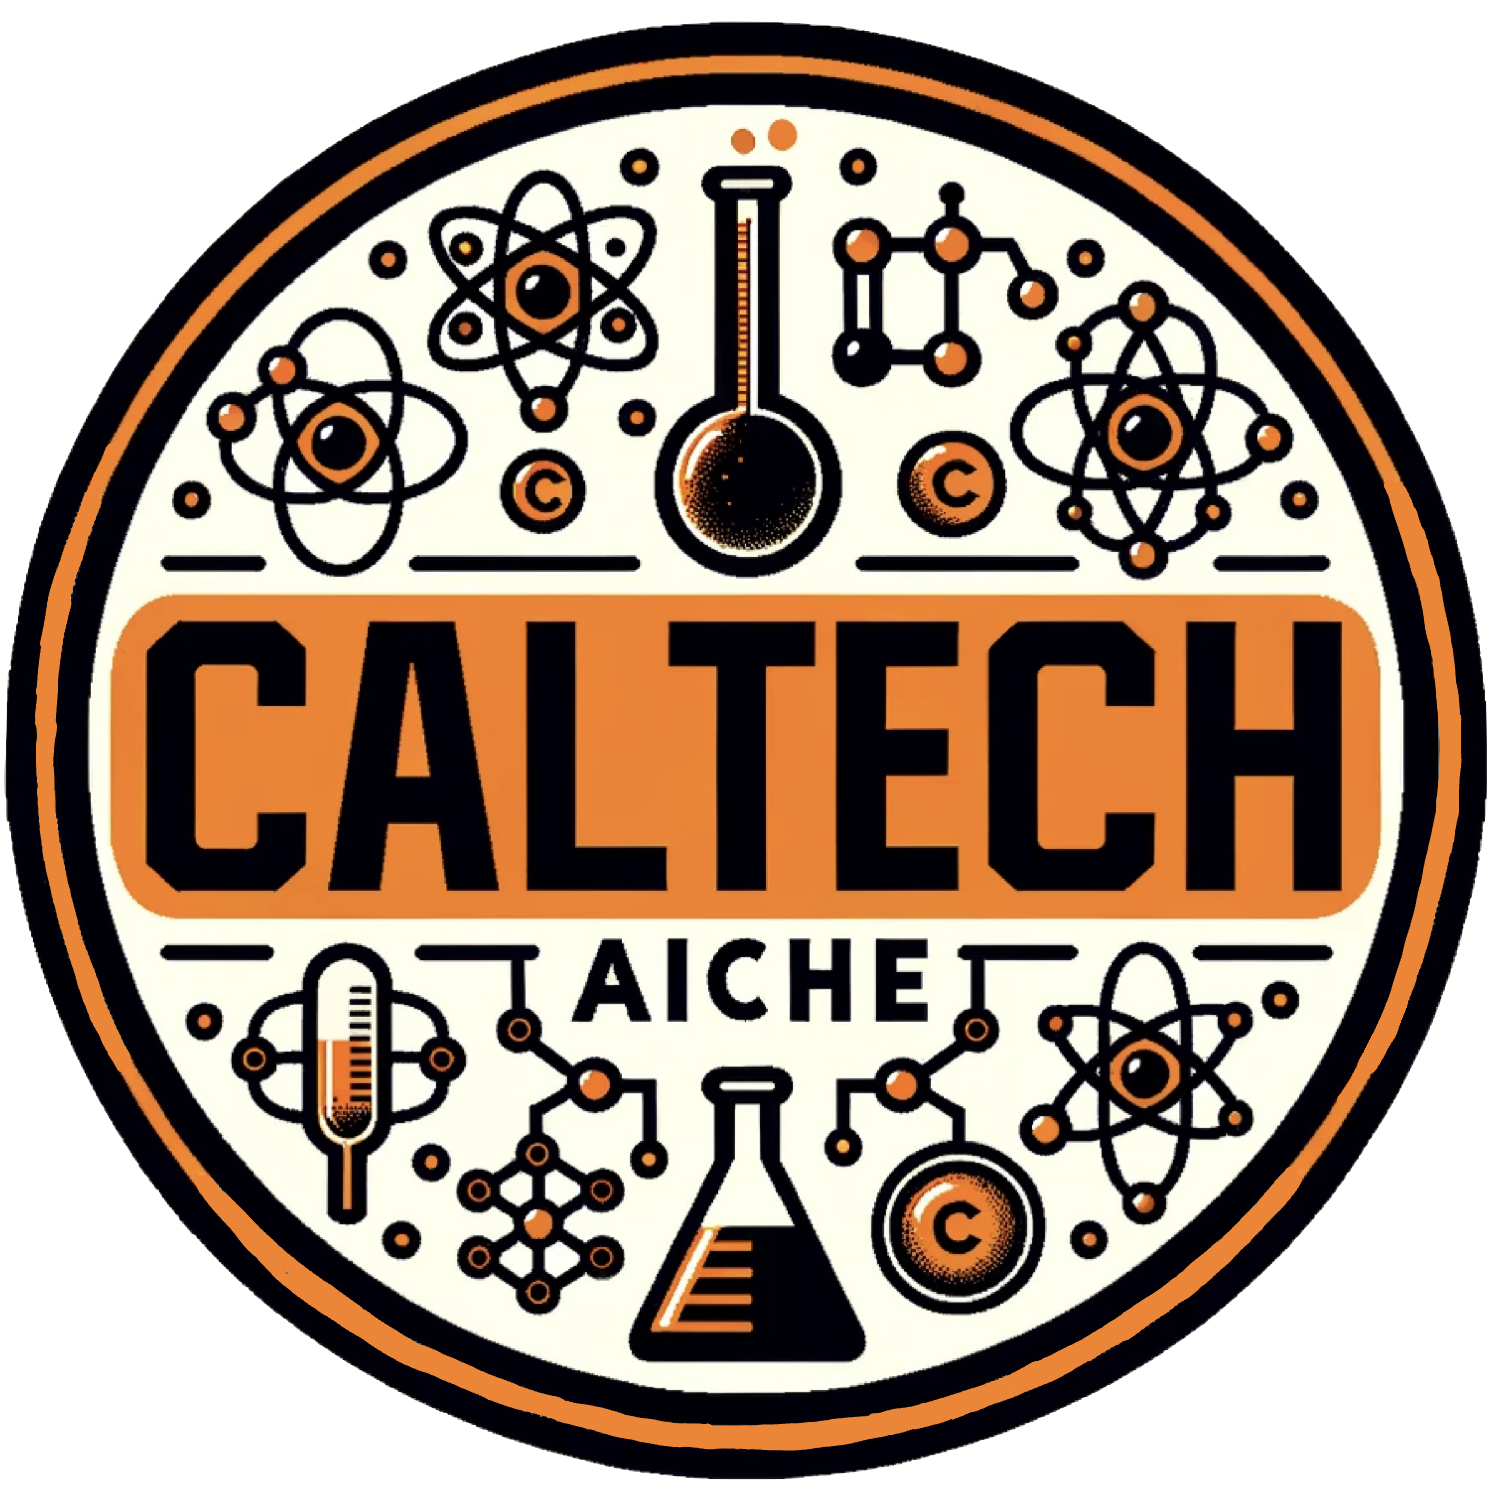 Caltech AIChE